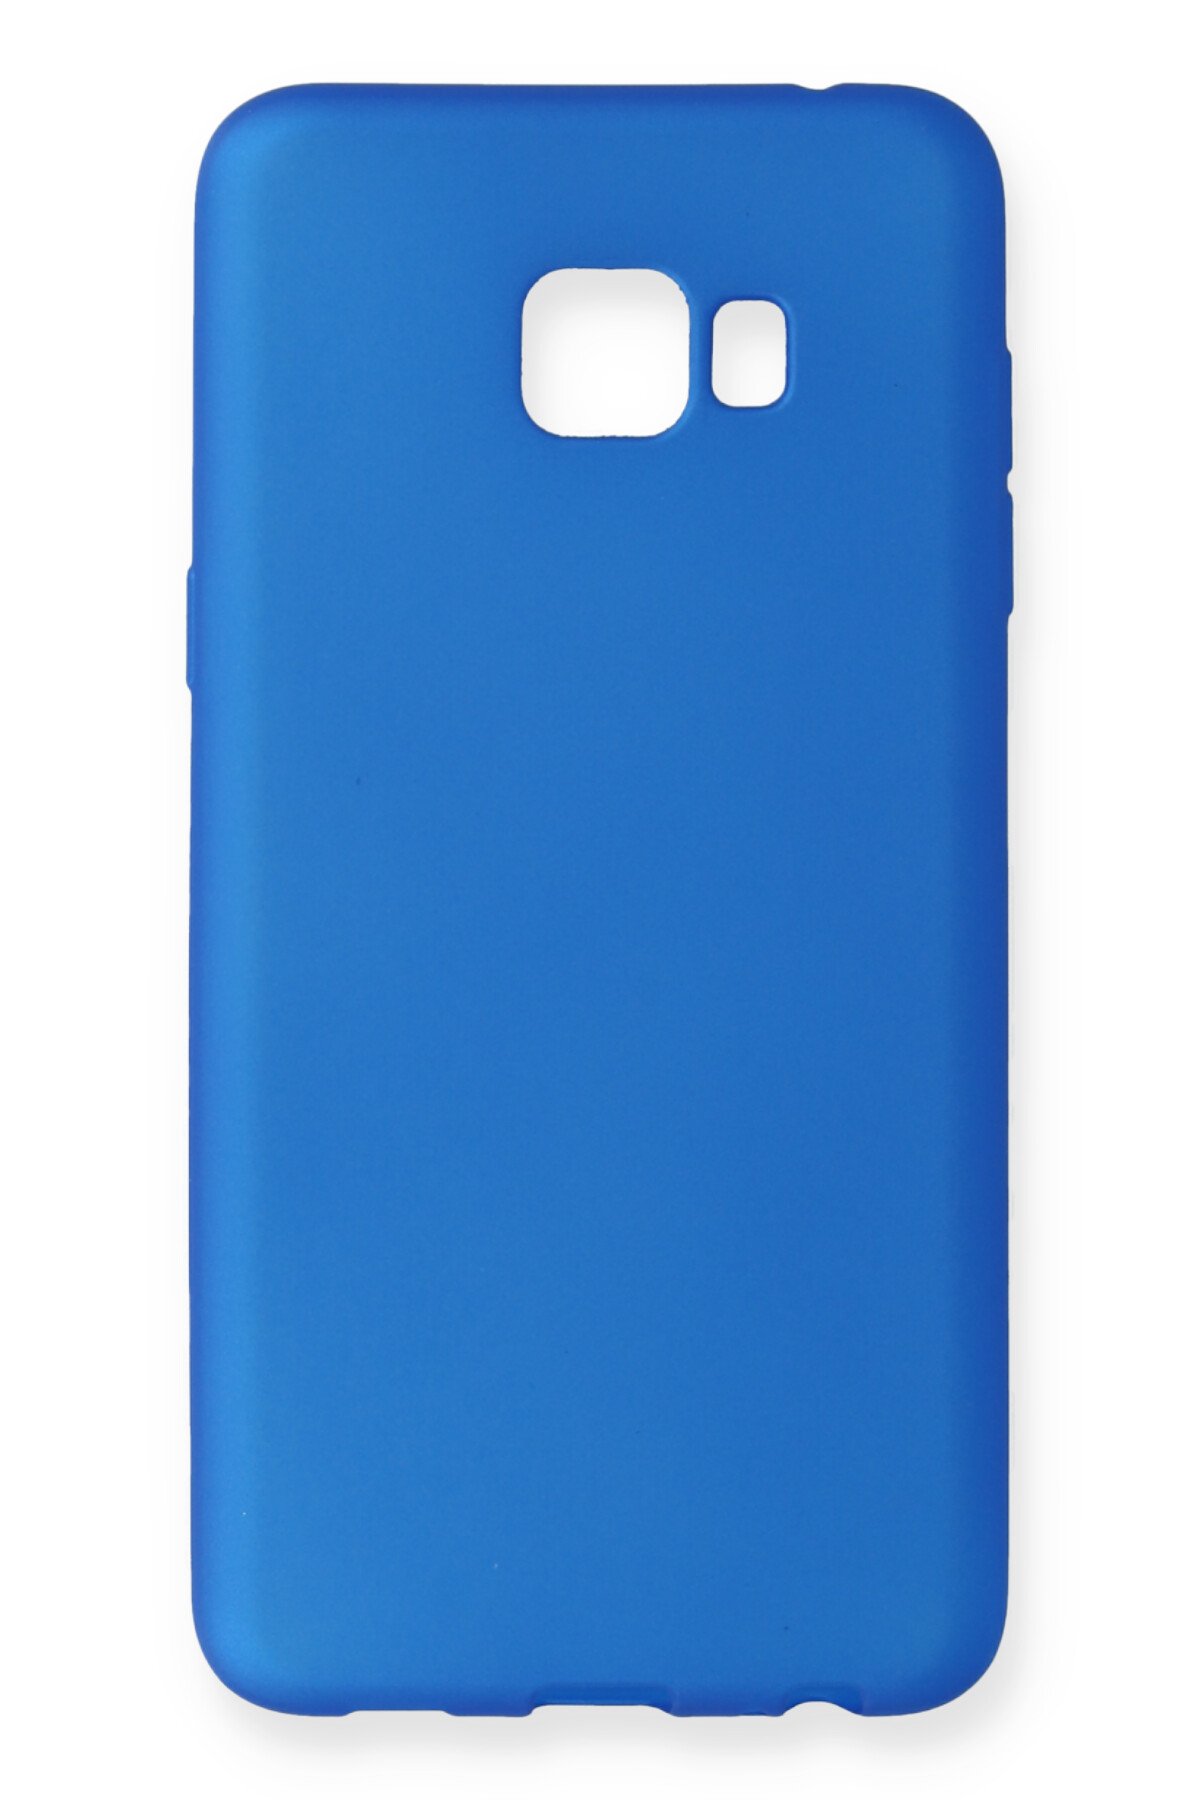 NewFace Newface Samsung Galaxy C7 Pro Kılıf Premium Rubber Silikon - Mavi